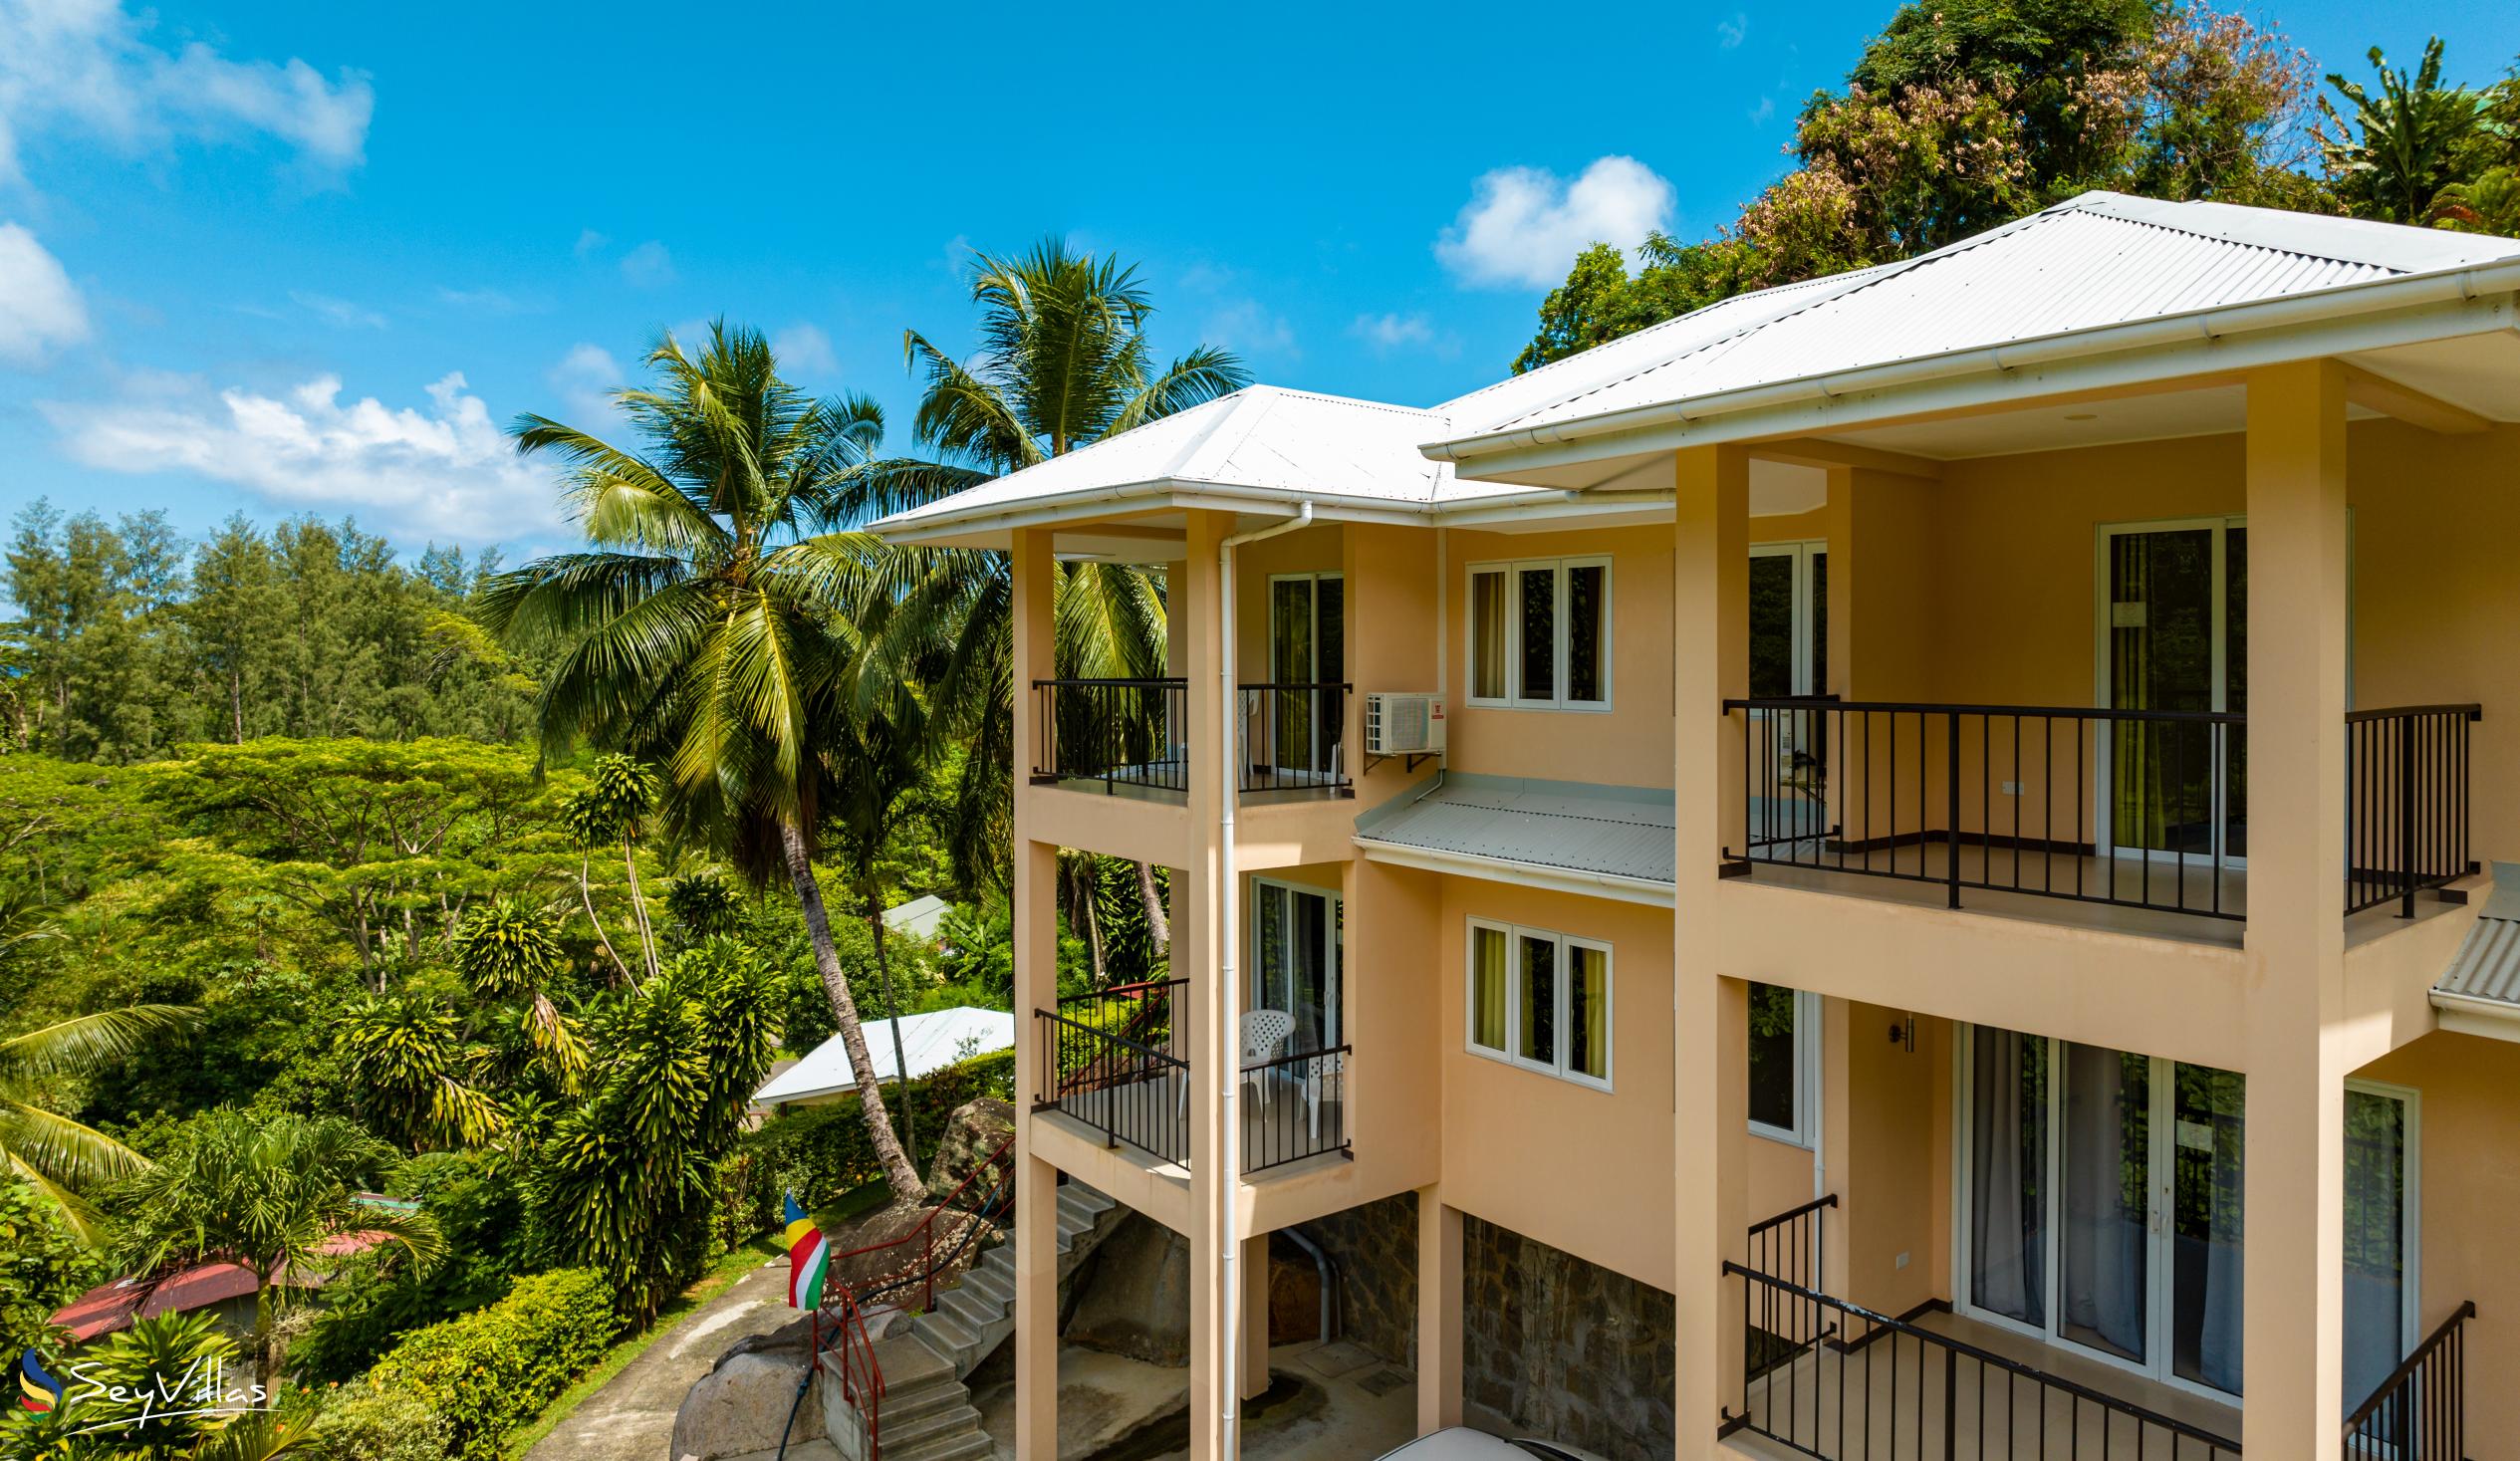 Photo 3: JAIDSS Holiday Apartments - Outdoor area - Mahé (Seychelles)